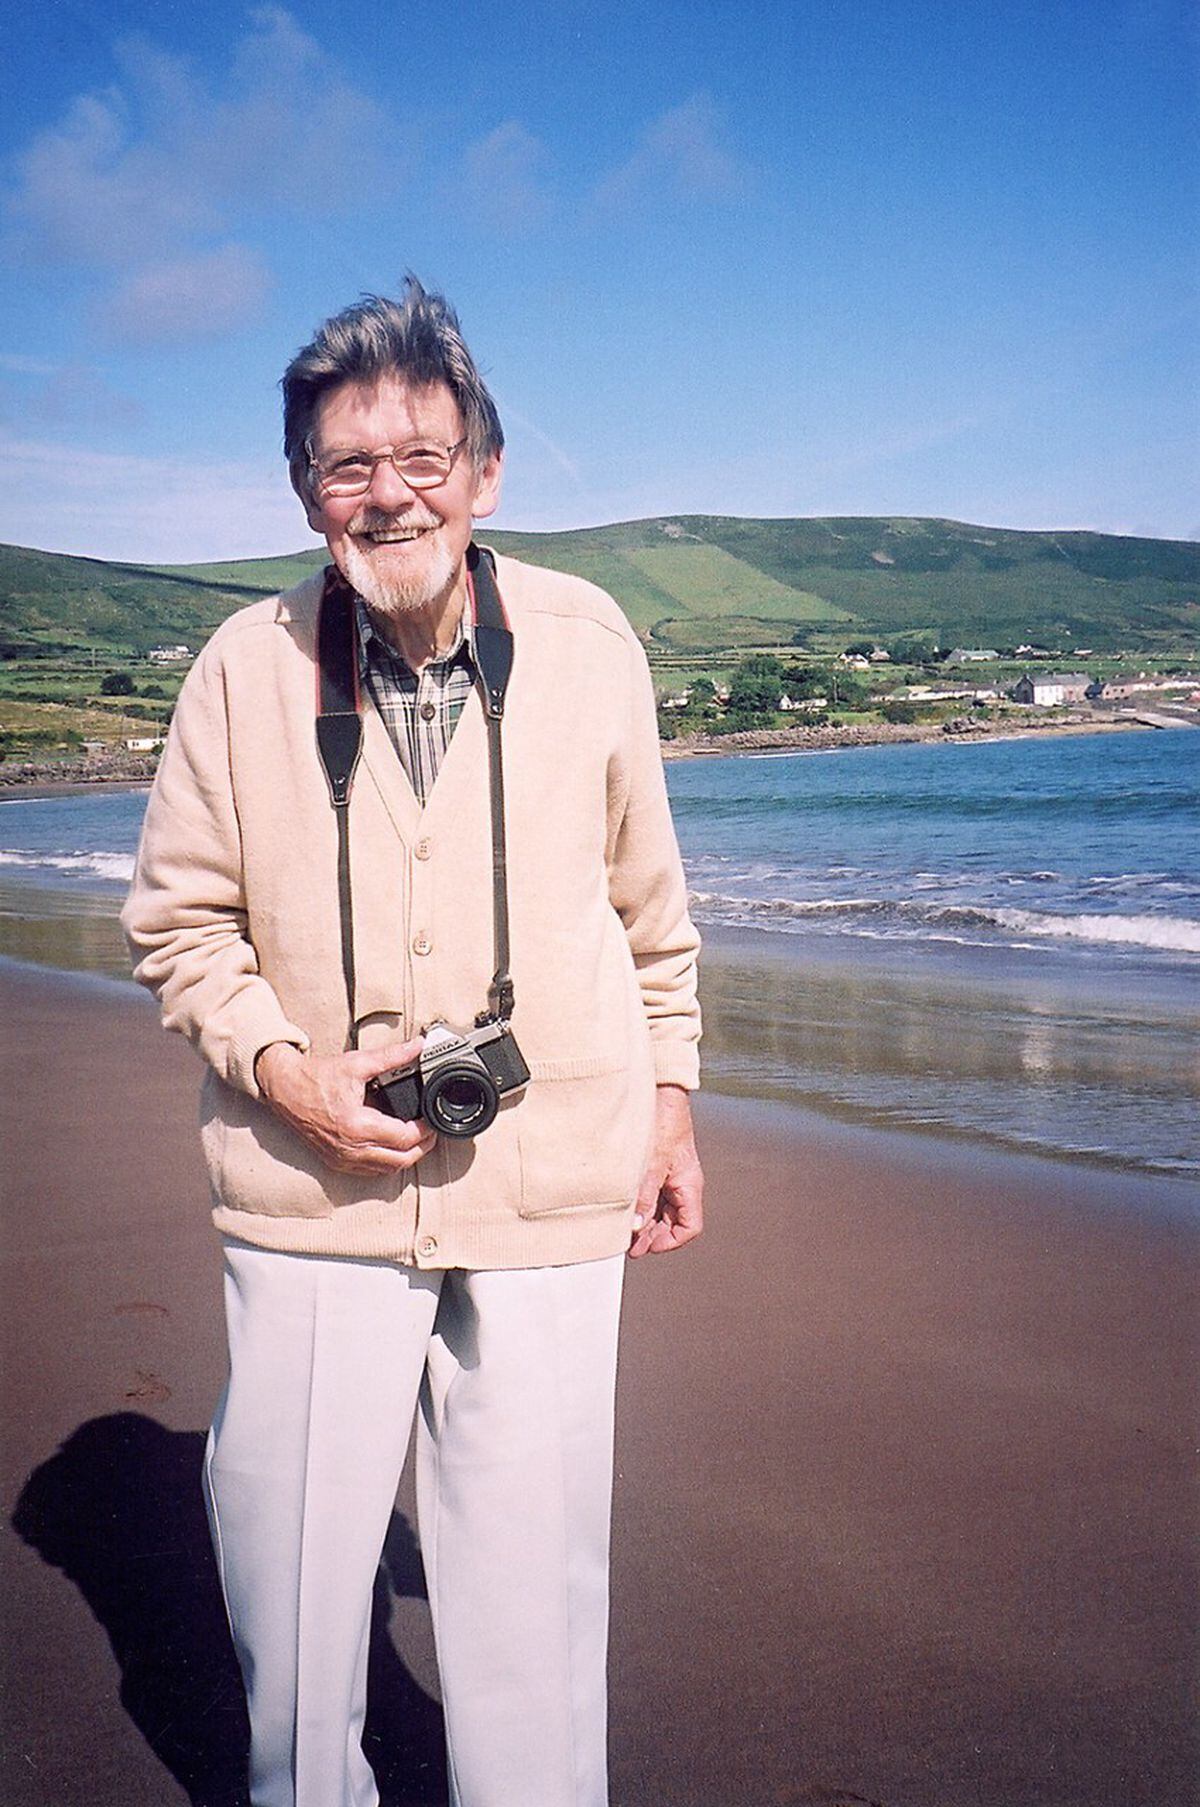 Robert Luckhurst, pictured here at 80